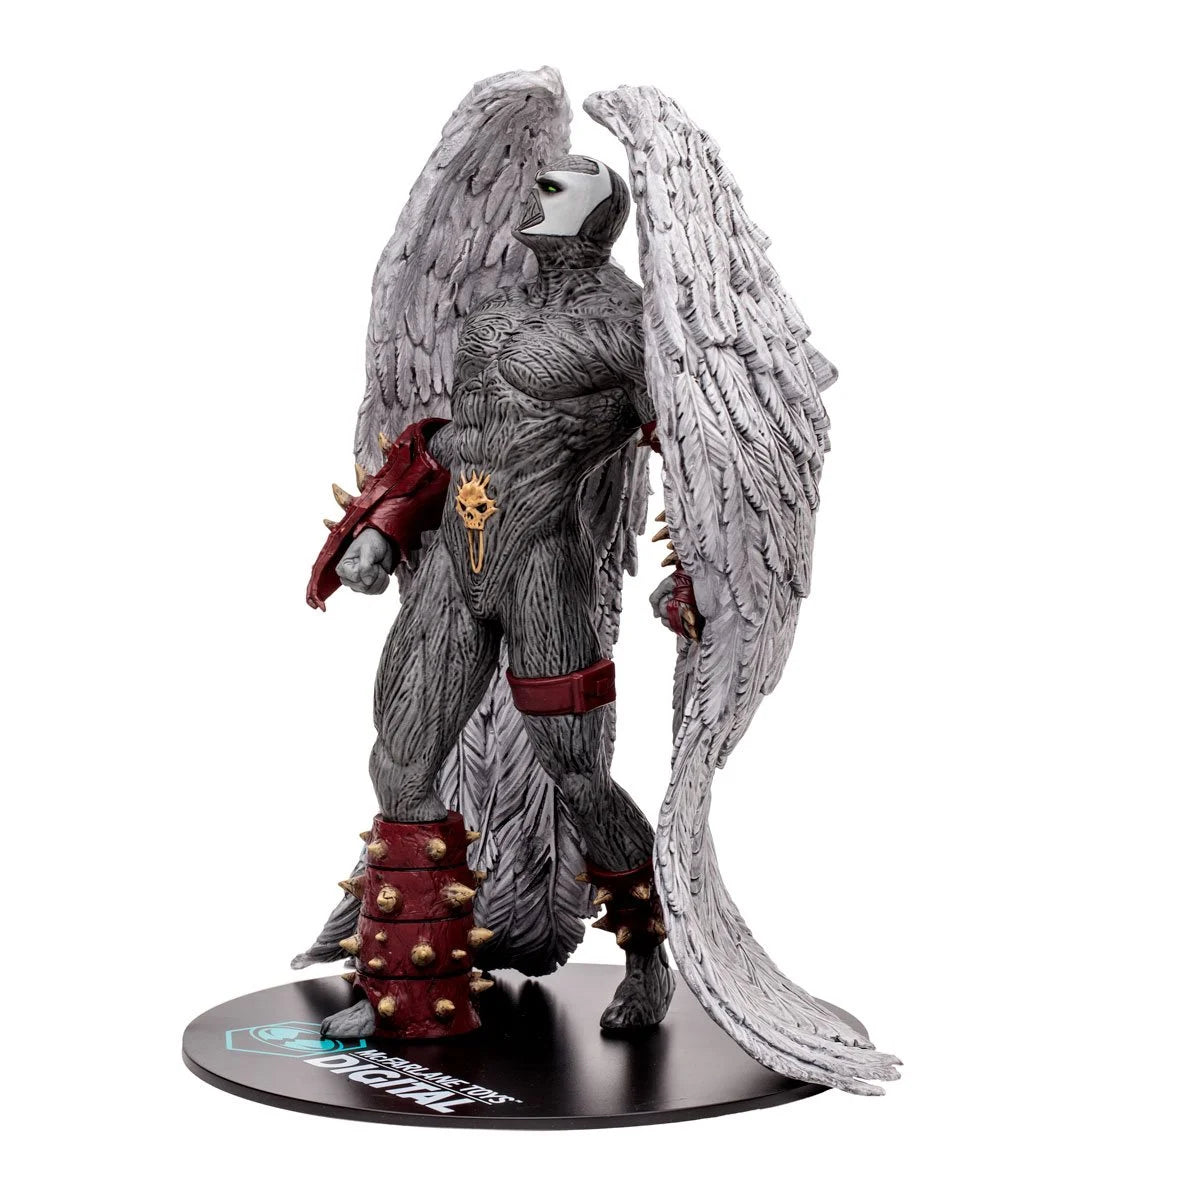 McFarlane Estatua Digital Collectible: Spawn - Spawn Wings of Redemption Escala 1/8